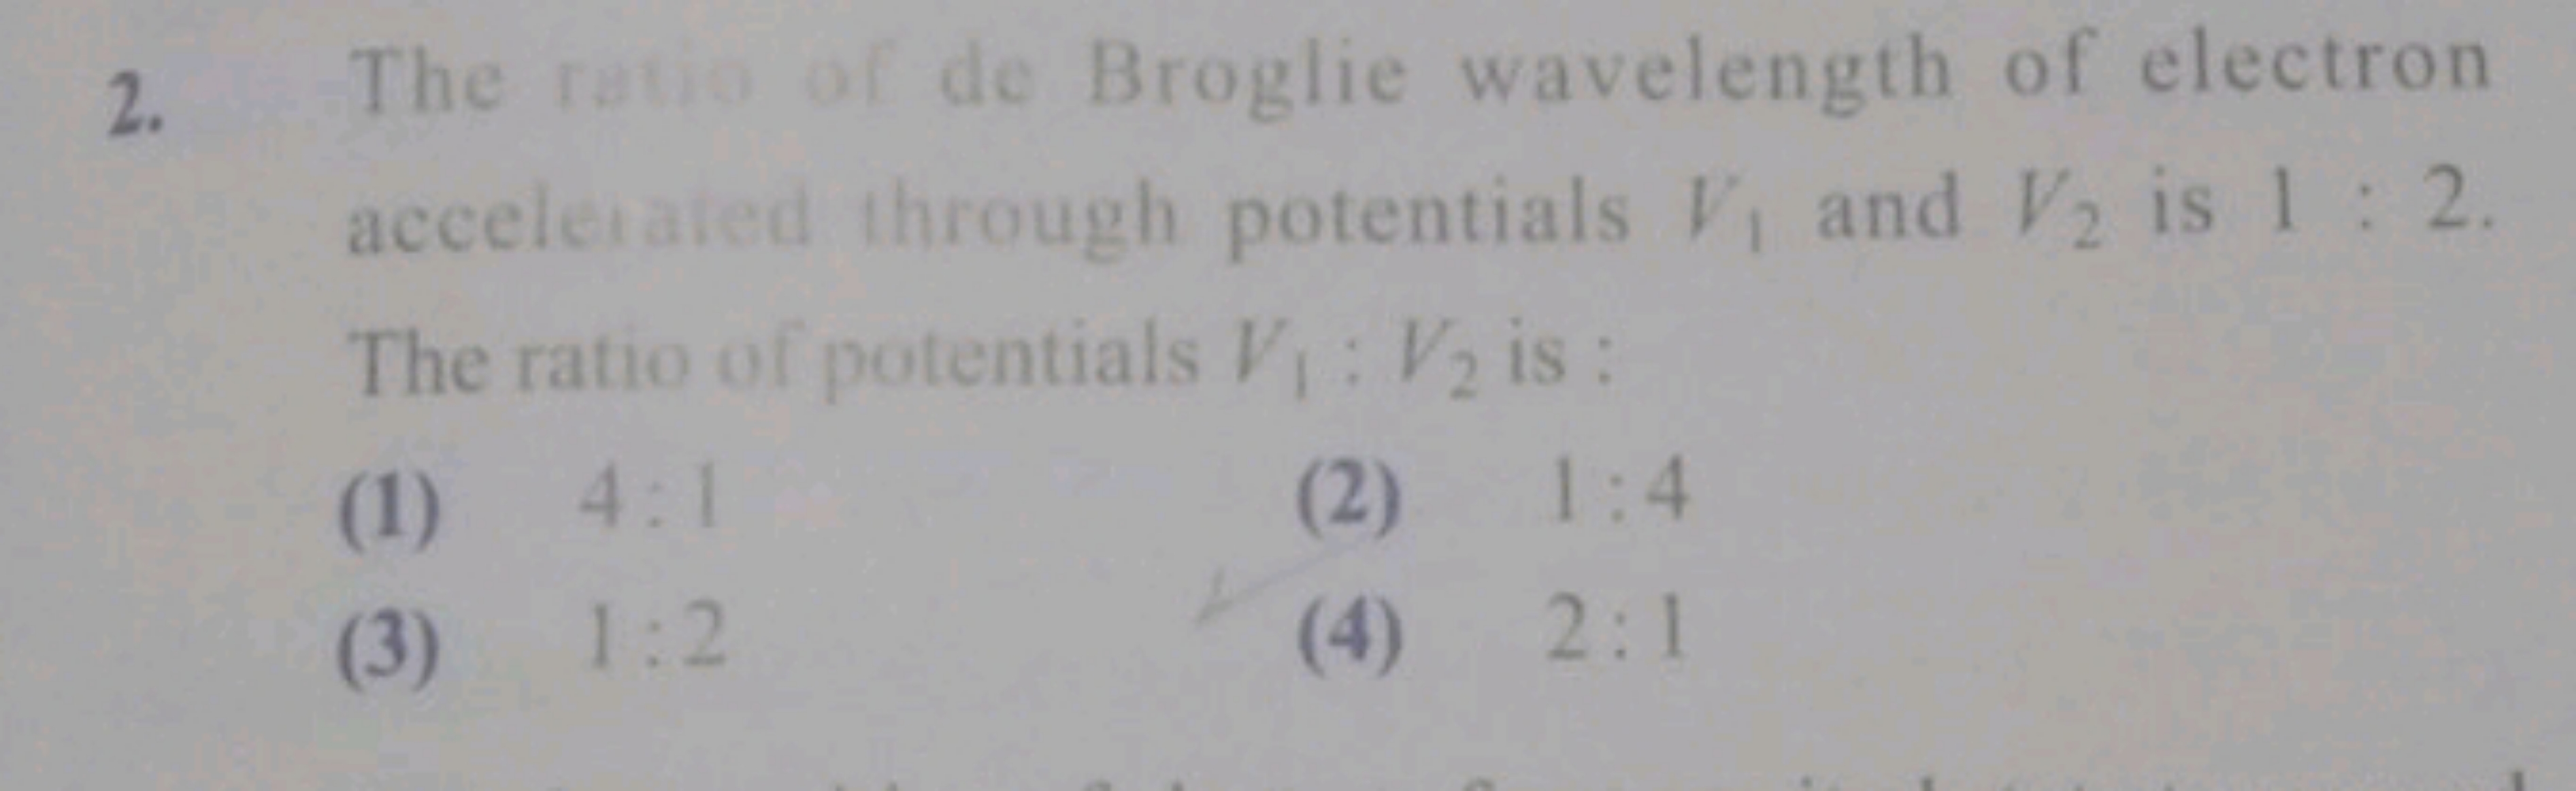 The ratio of de Broglie wavelength of electron accelerared through pot